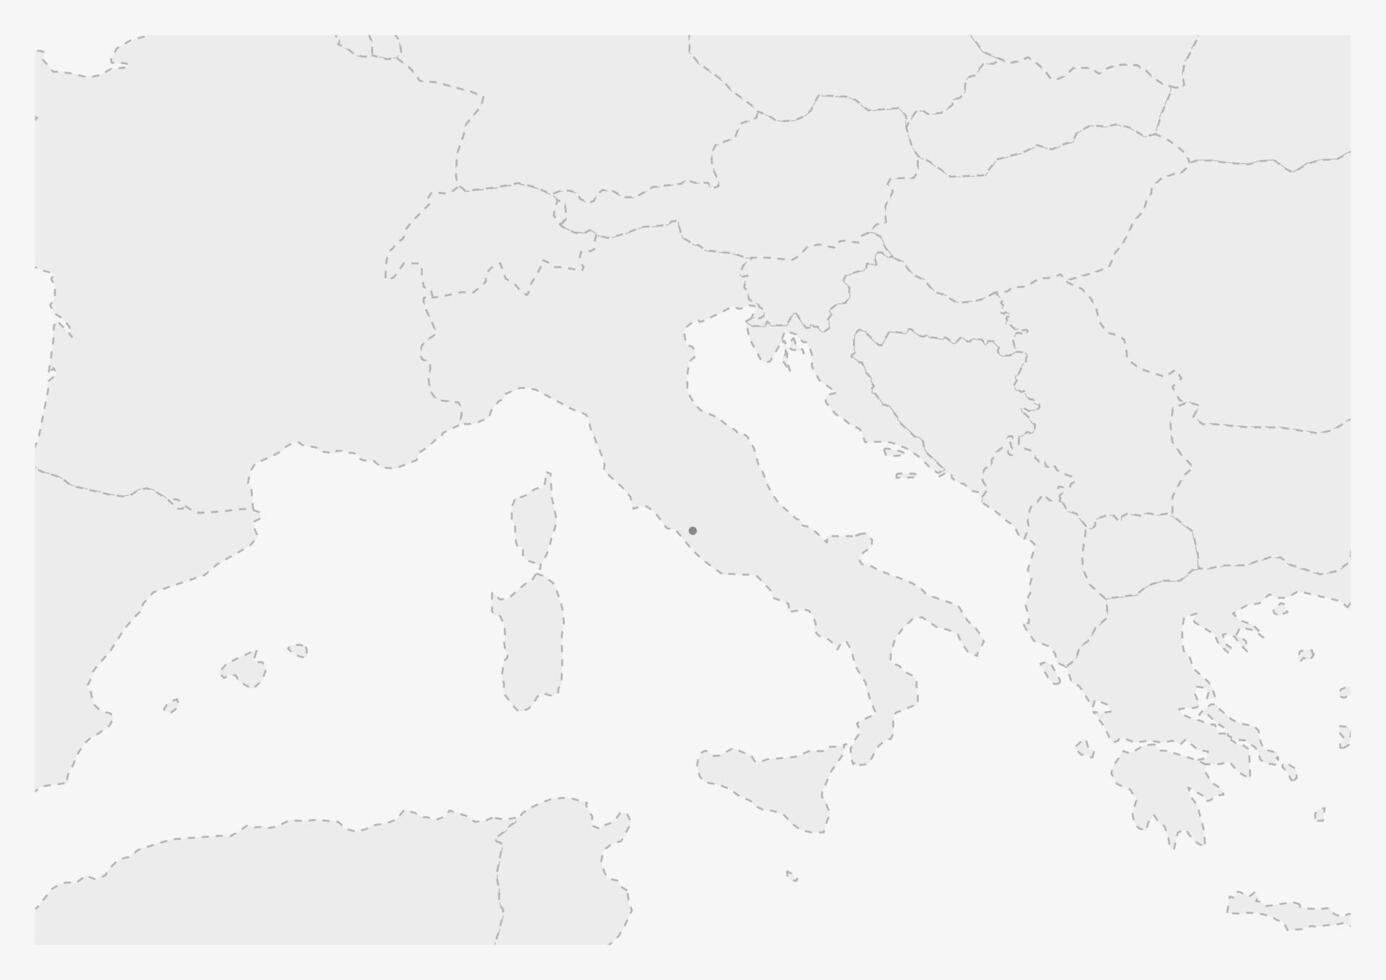 Karte von Europa mit hervorgehoben Vatikan Stadt Karte vektor